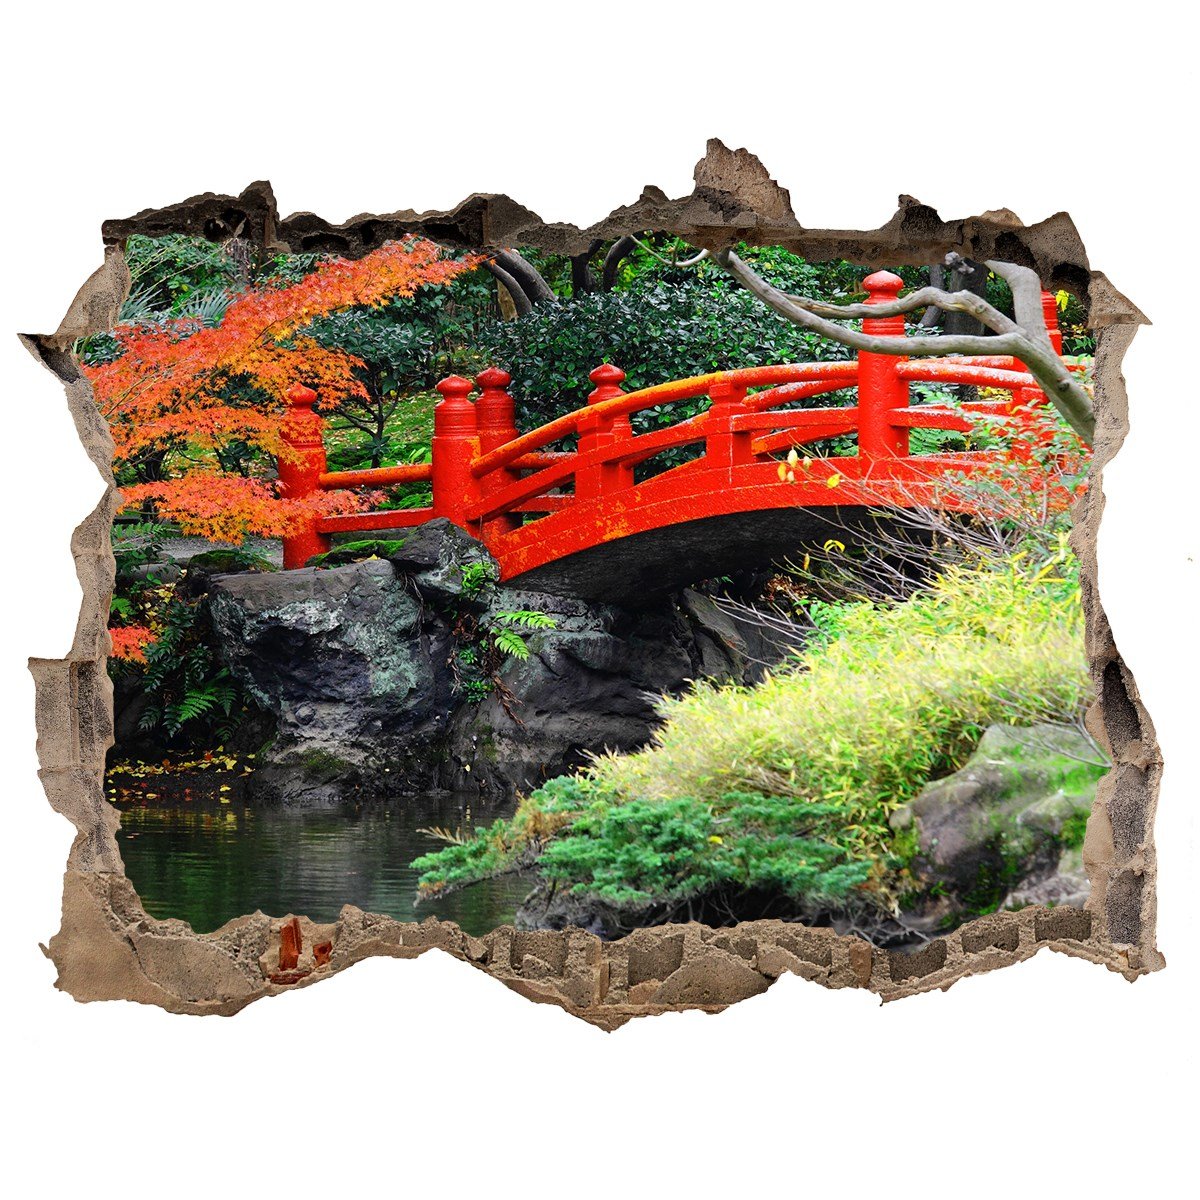 Naklejka fototapeta 3D widok Japoński ogród 120x81, Tulup